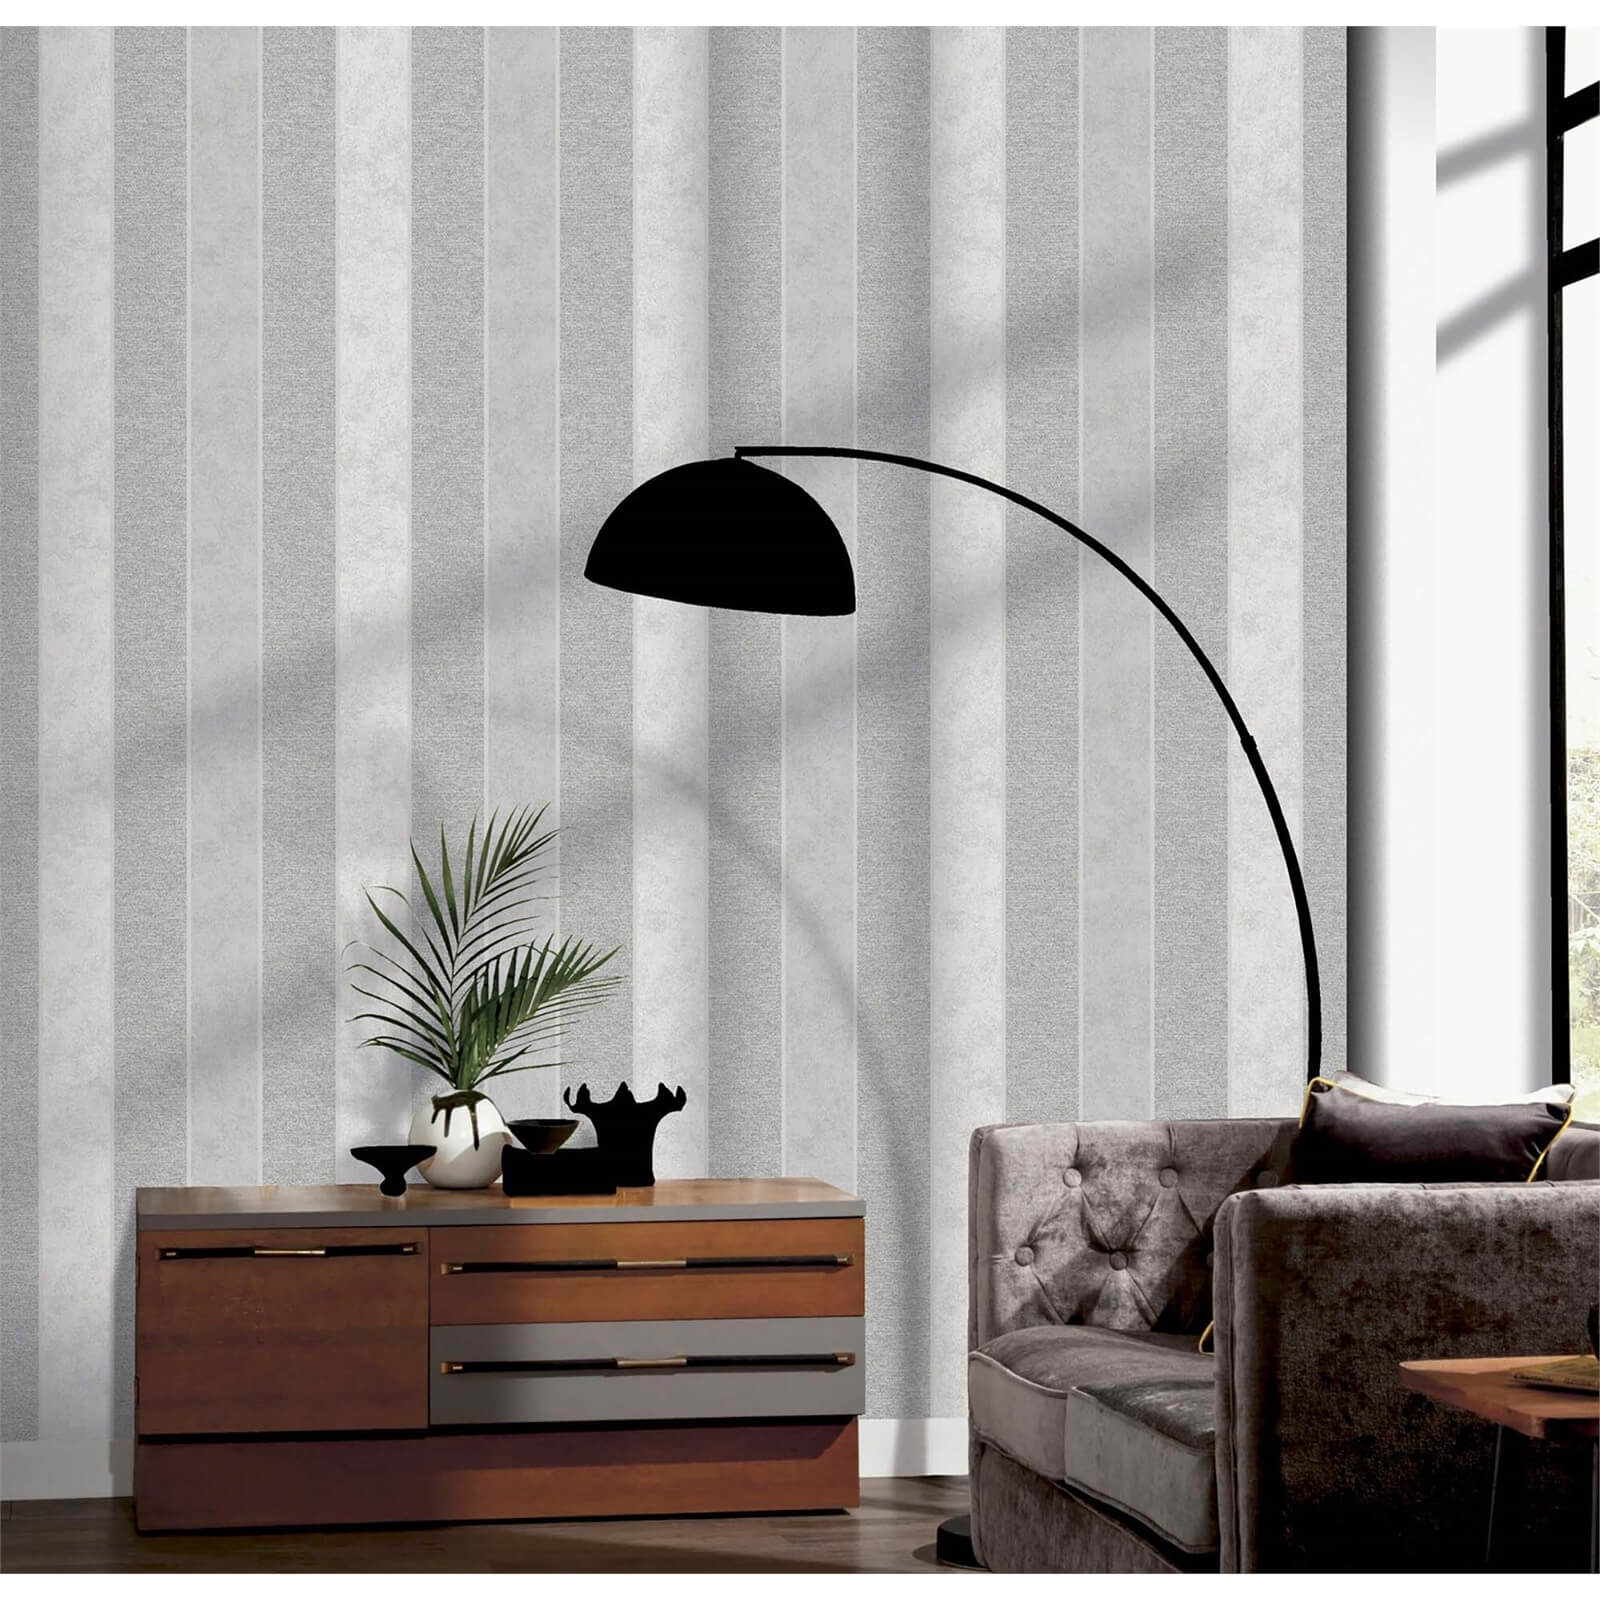 Arthouse Calico Stripe Grey Wallpaper